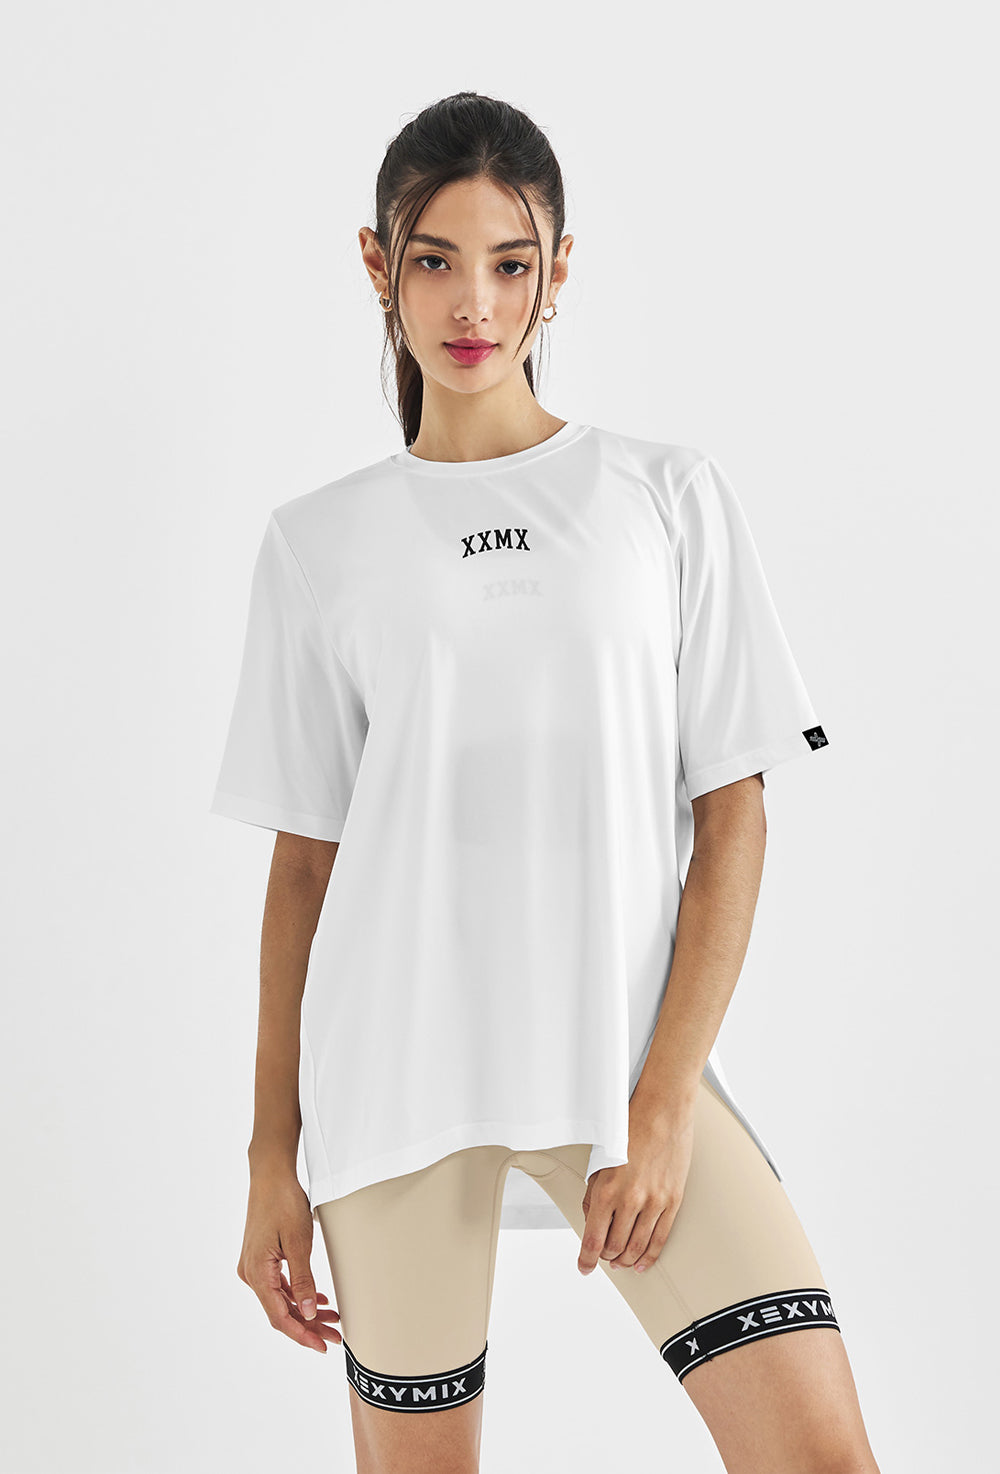 XXMX Coverup T-Shirt - Ivory â€“ XEXYMIX Australia